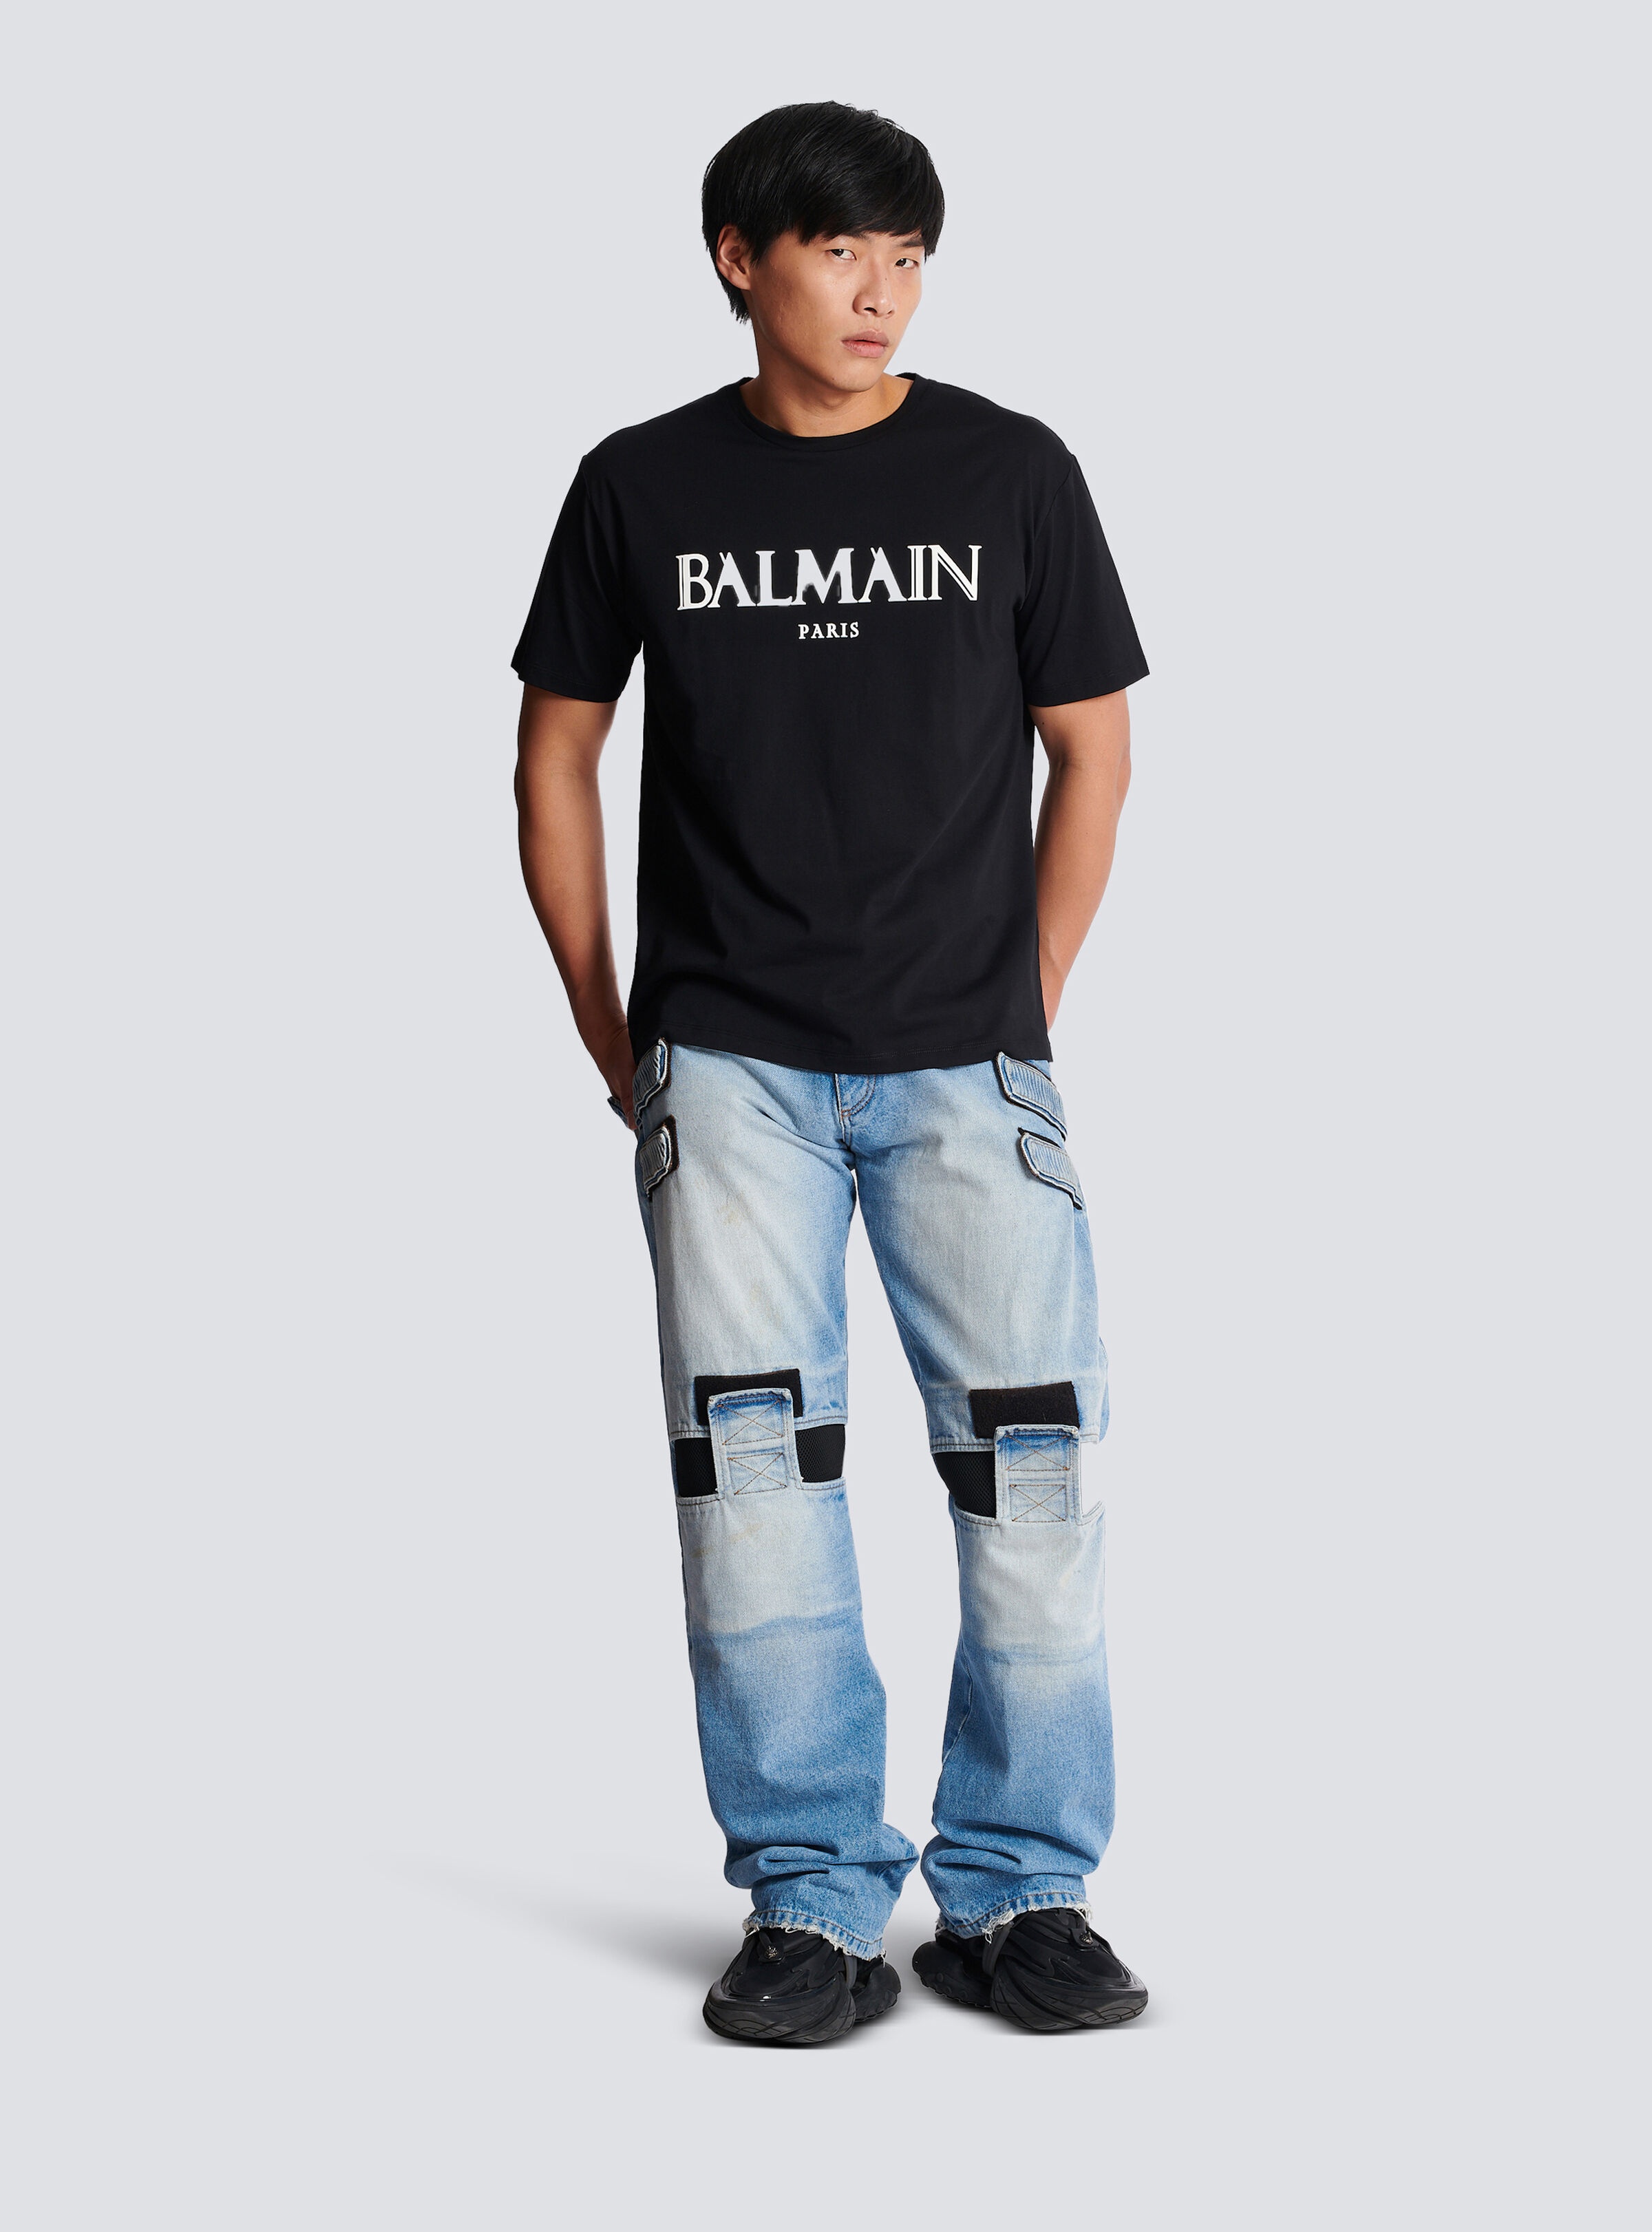 T-shirt with rubber Roman Balmain logo - 2